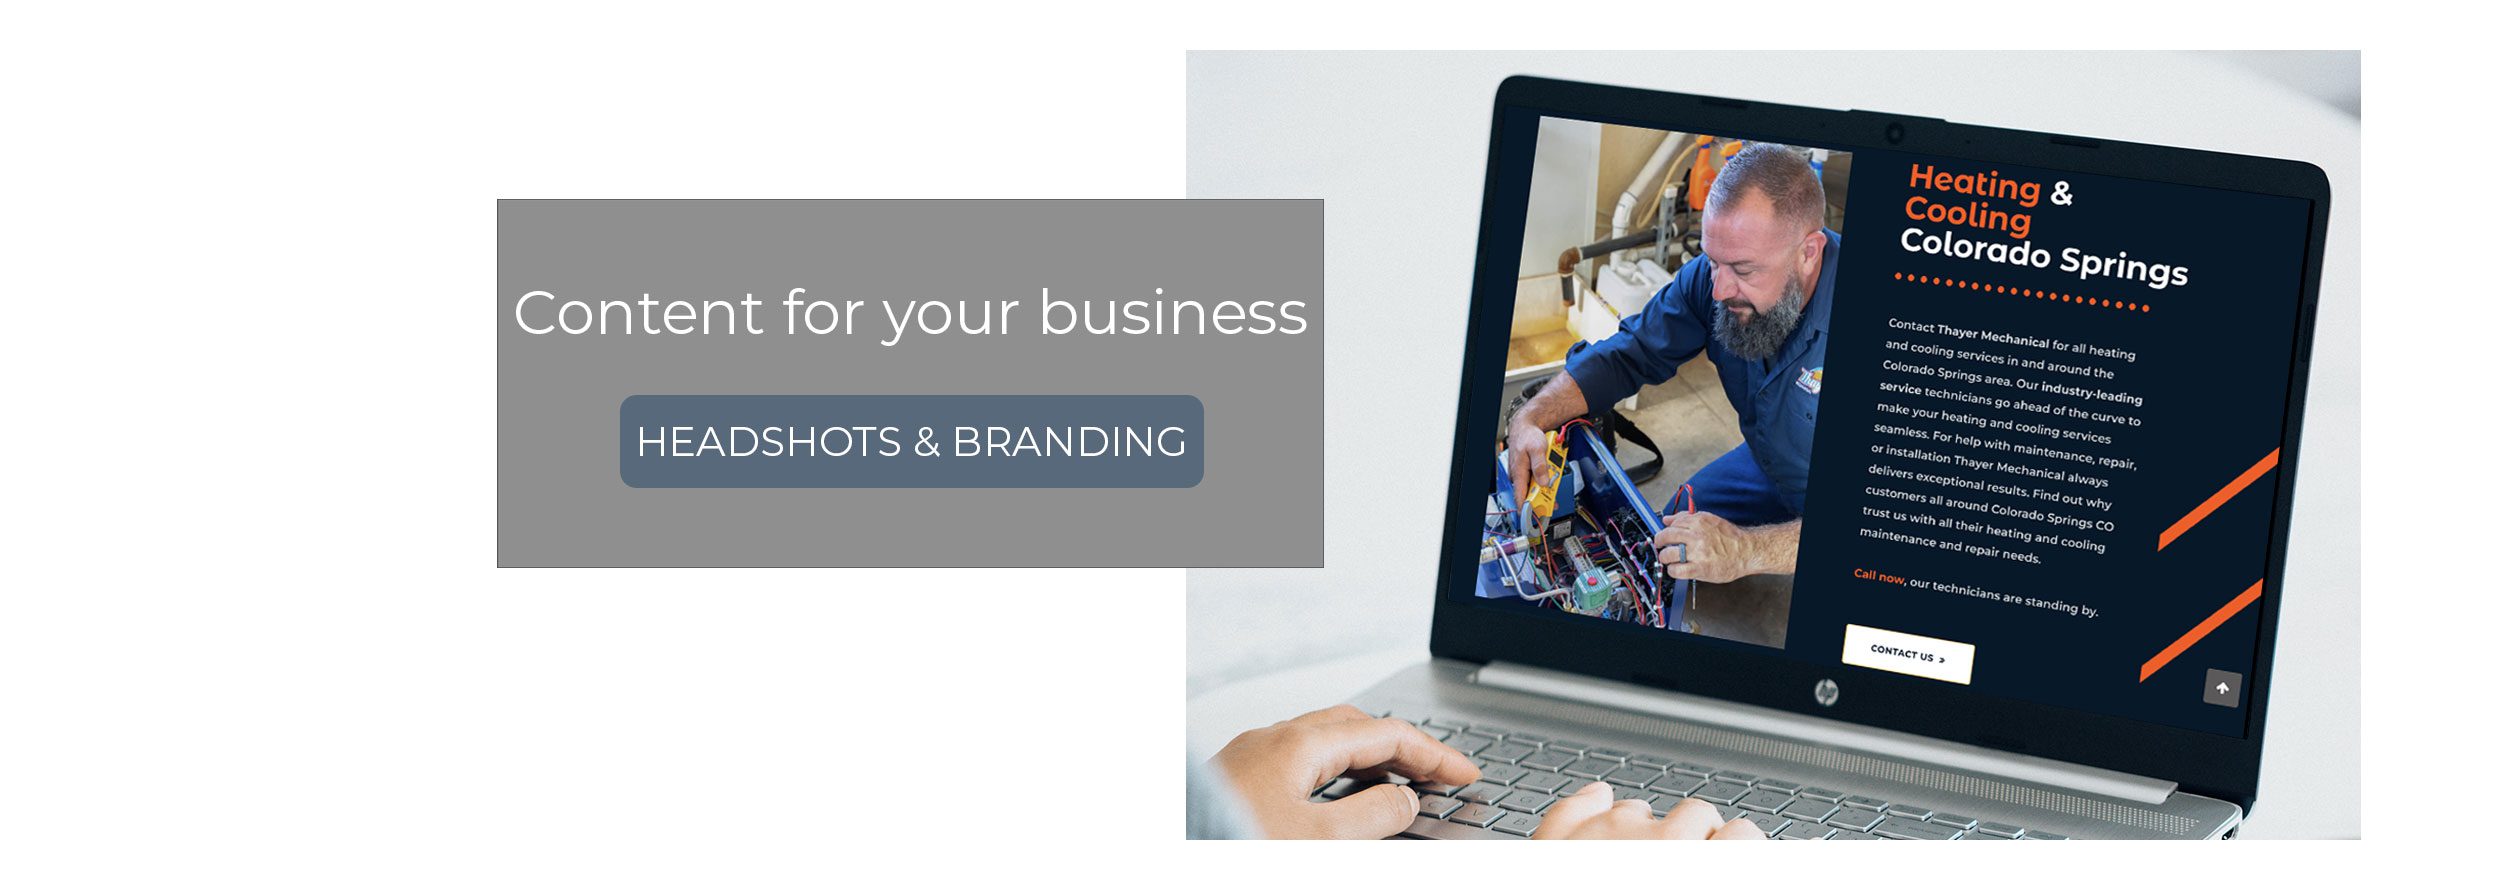 Website with business branding